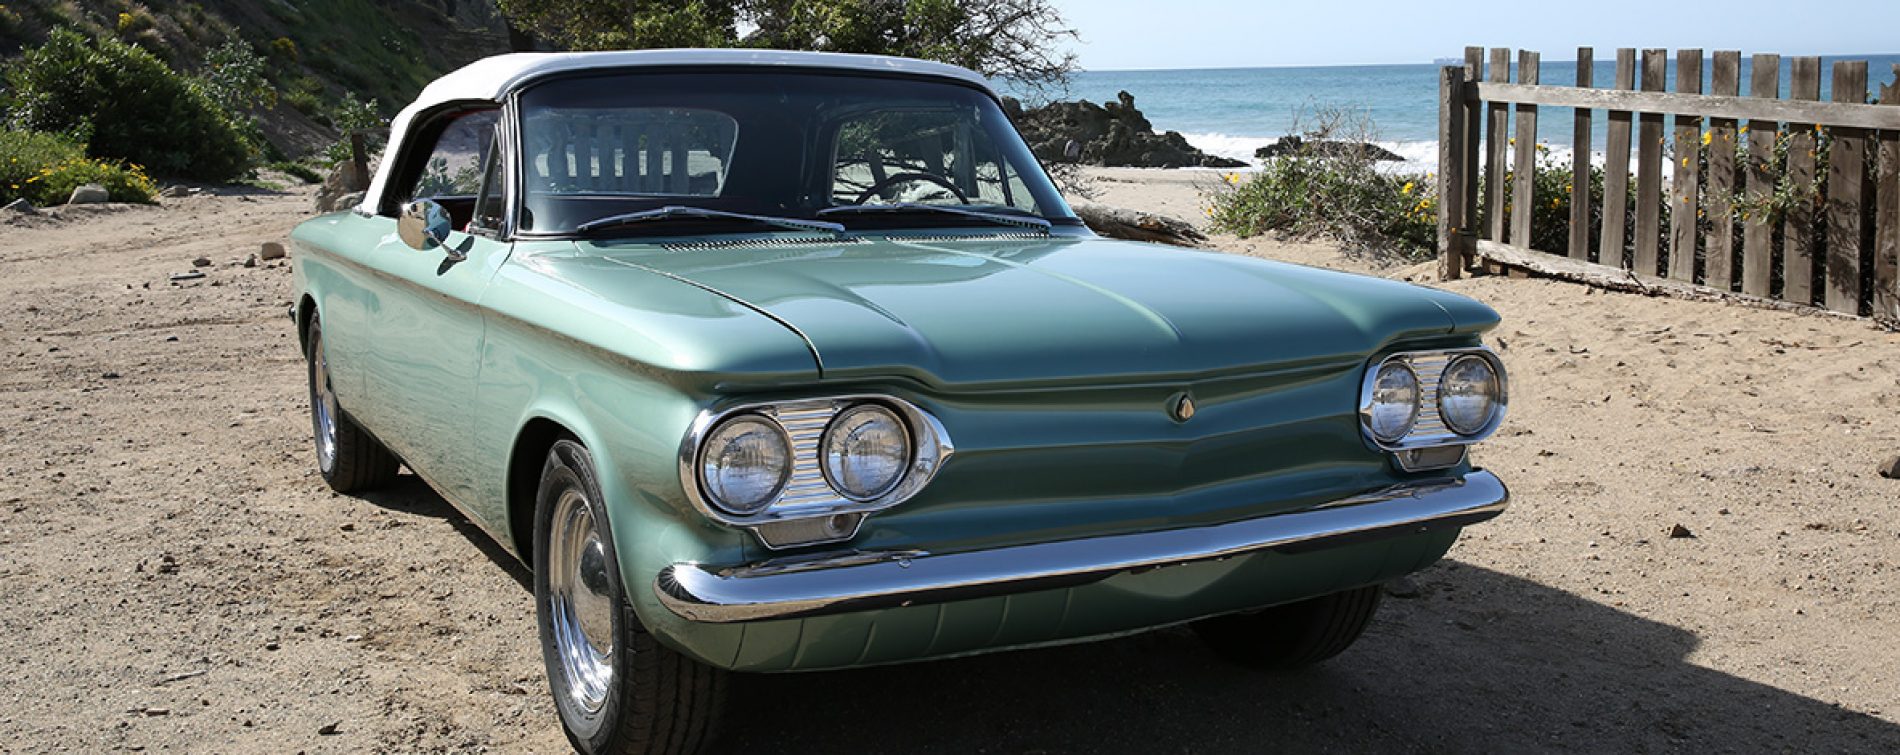 1963-chevy-corvair.jpg